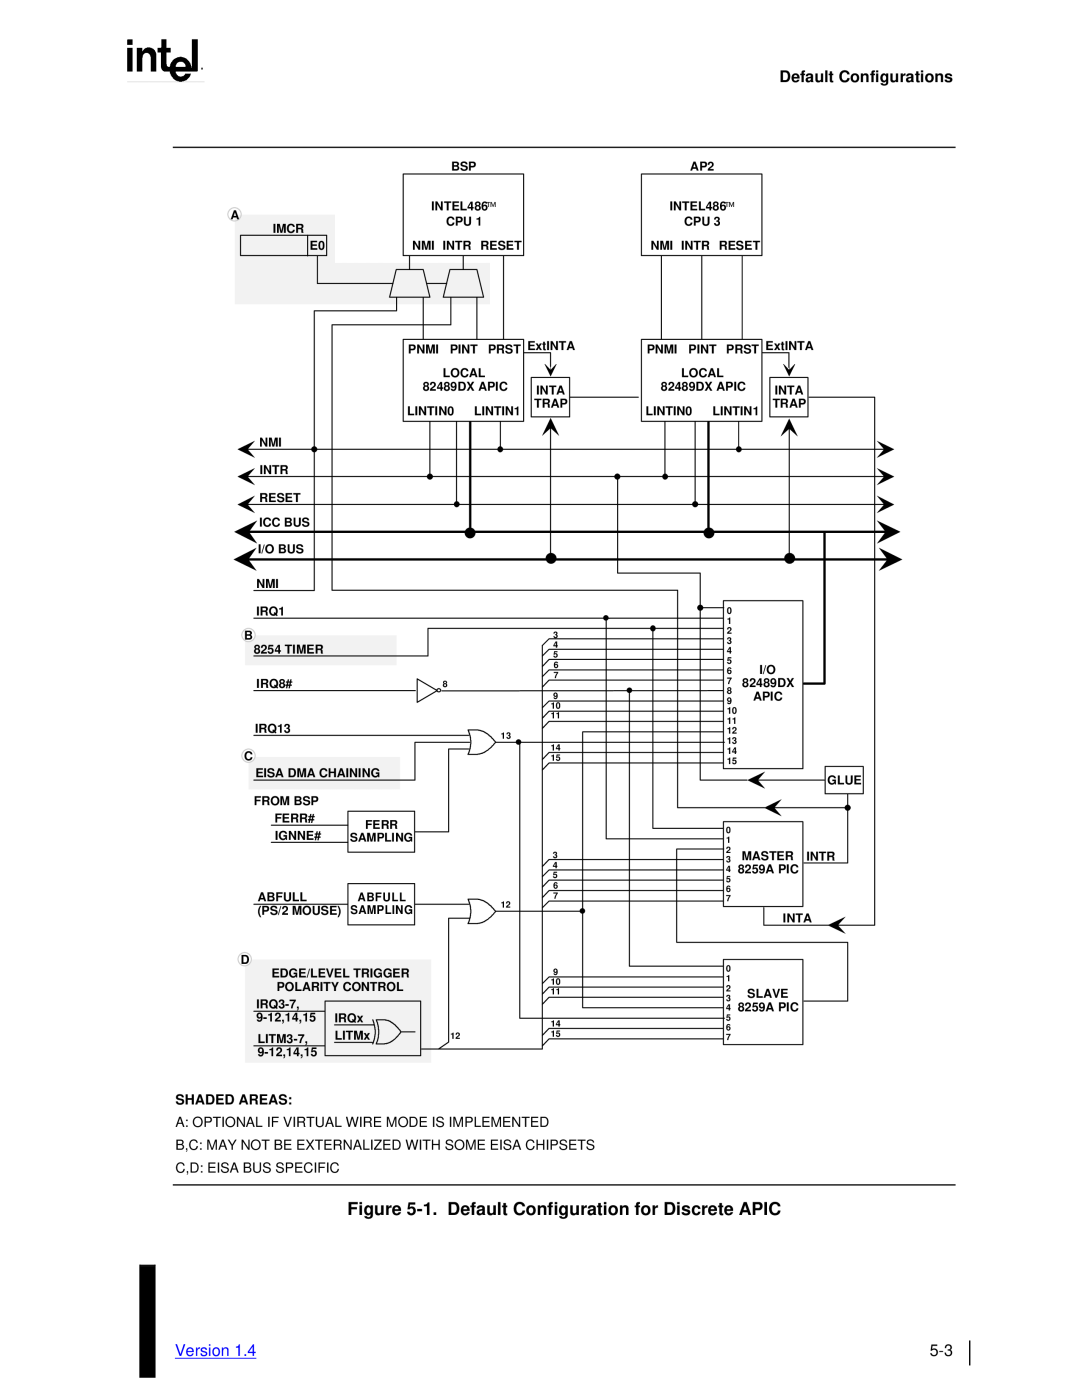 Intel MultiProcessor manual Default Configurations, Version, Shaded Areas, Mark 